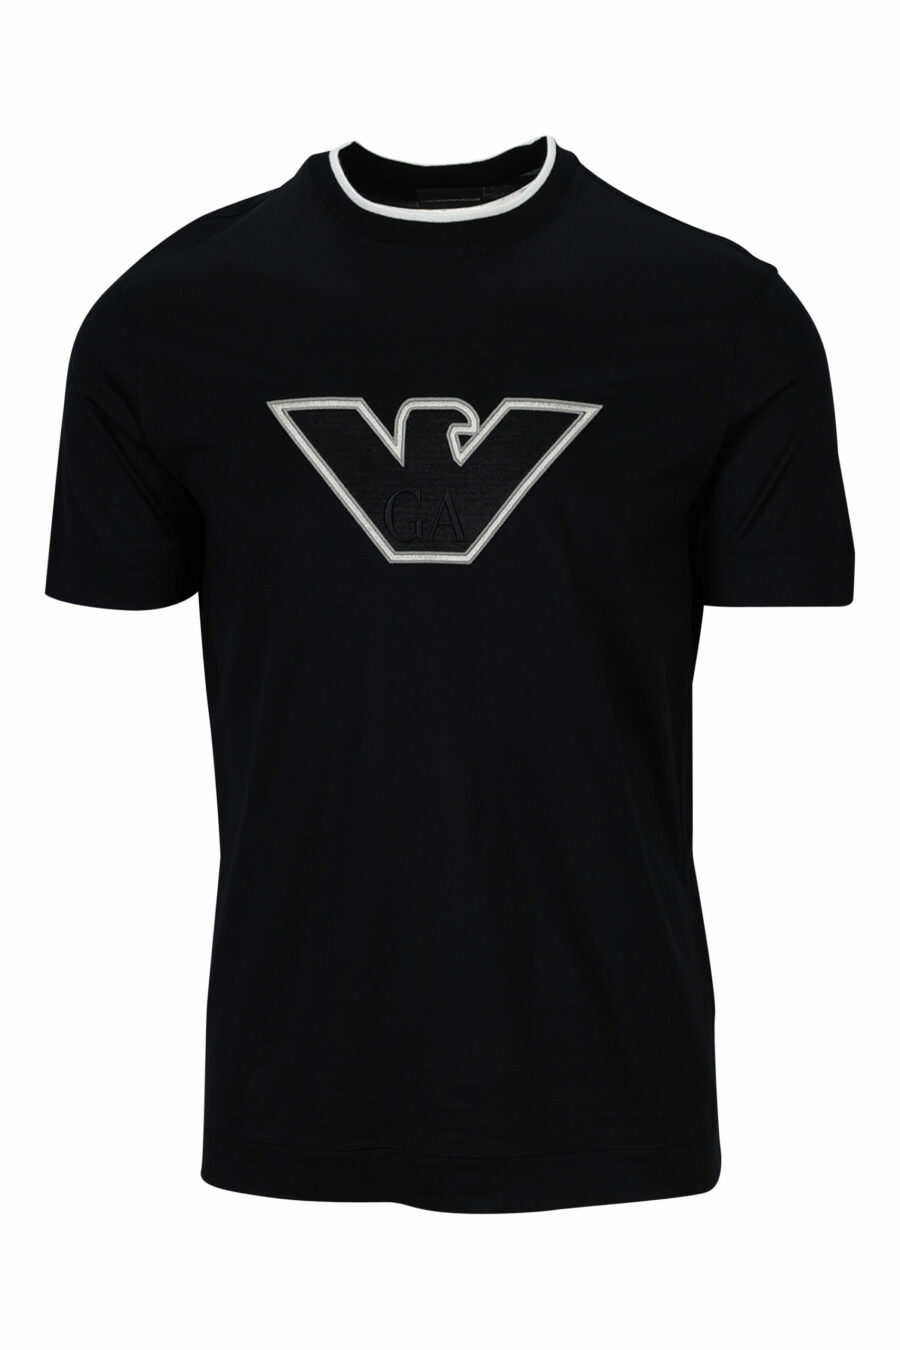 Black T-shirt with white eagle maxilogo outlined - 8057767554040 scaled